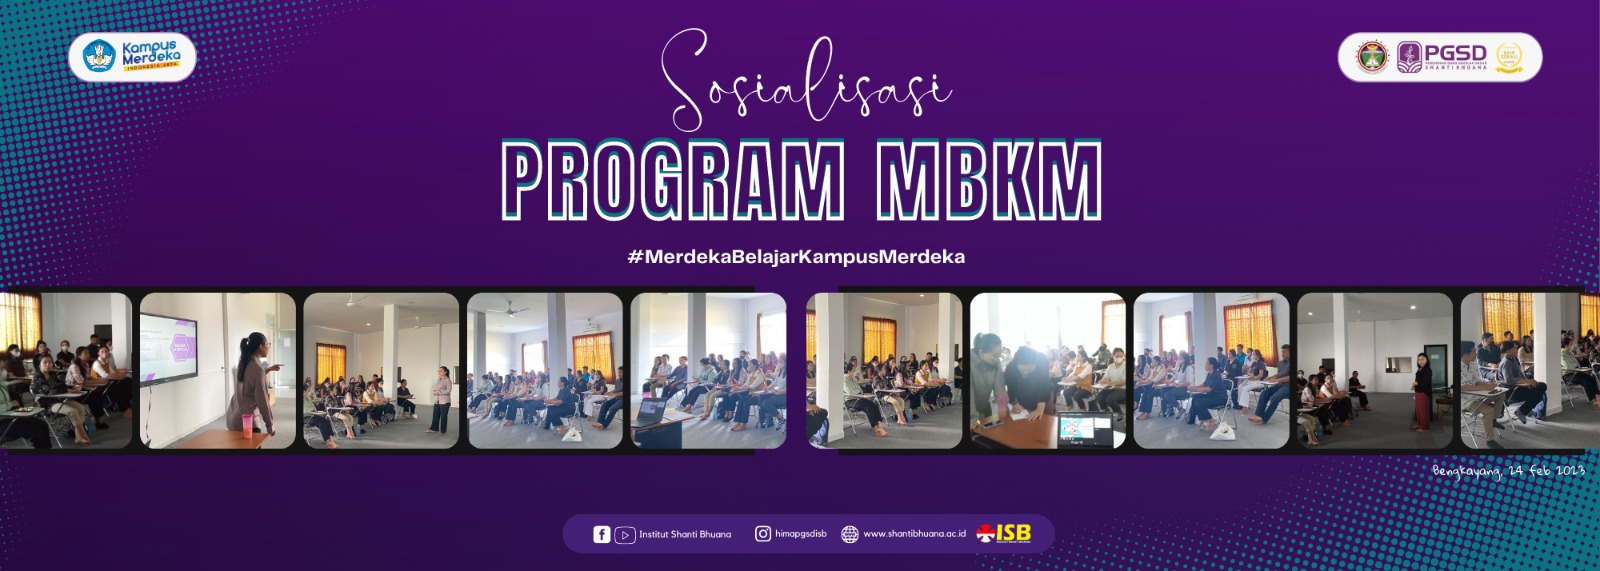 Sosialisasi Program MBKM